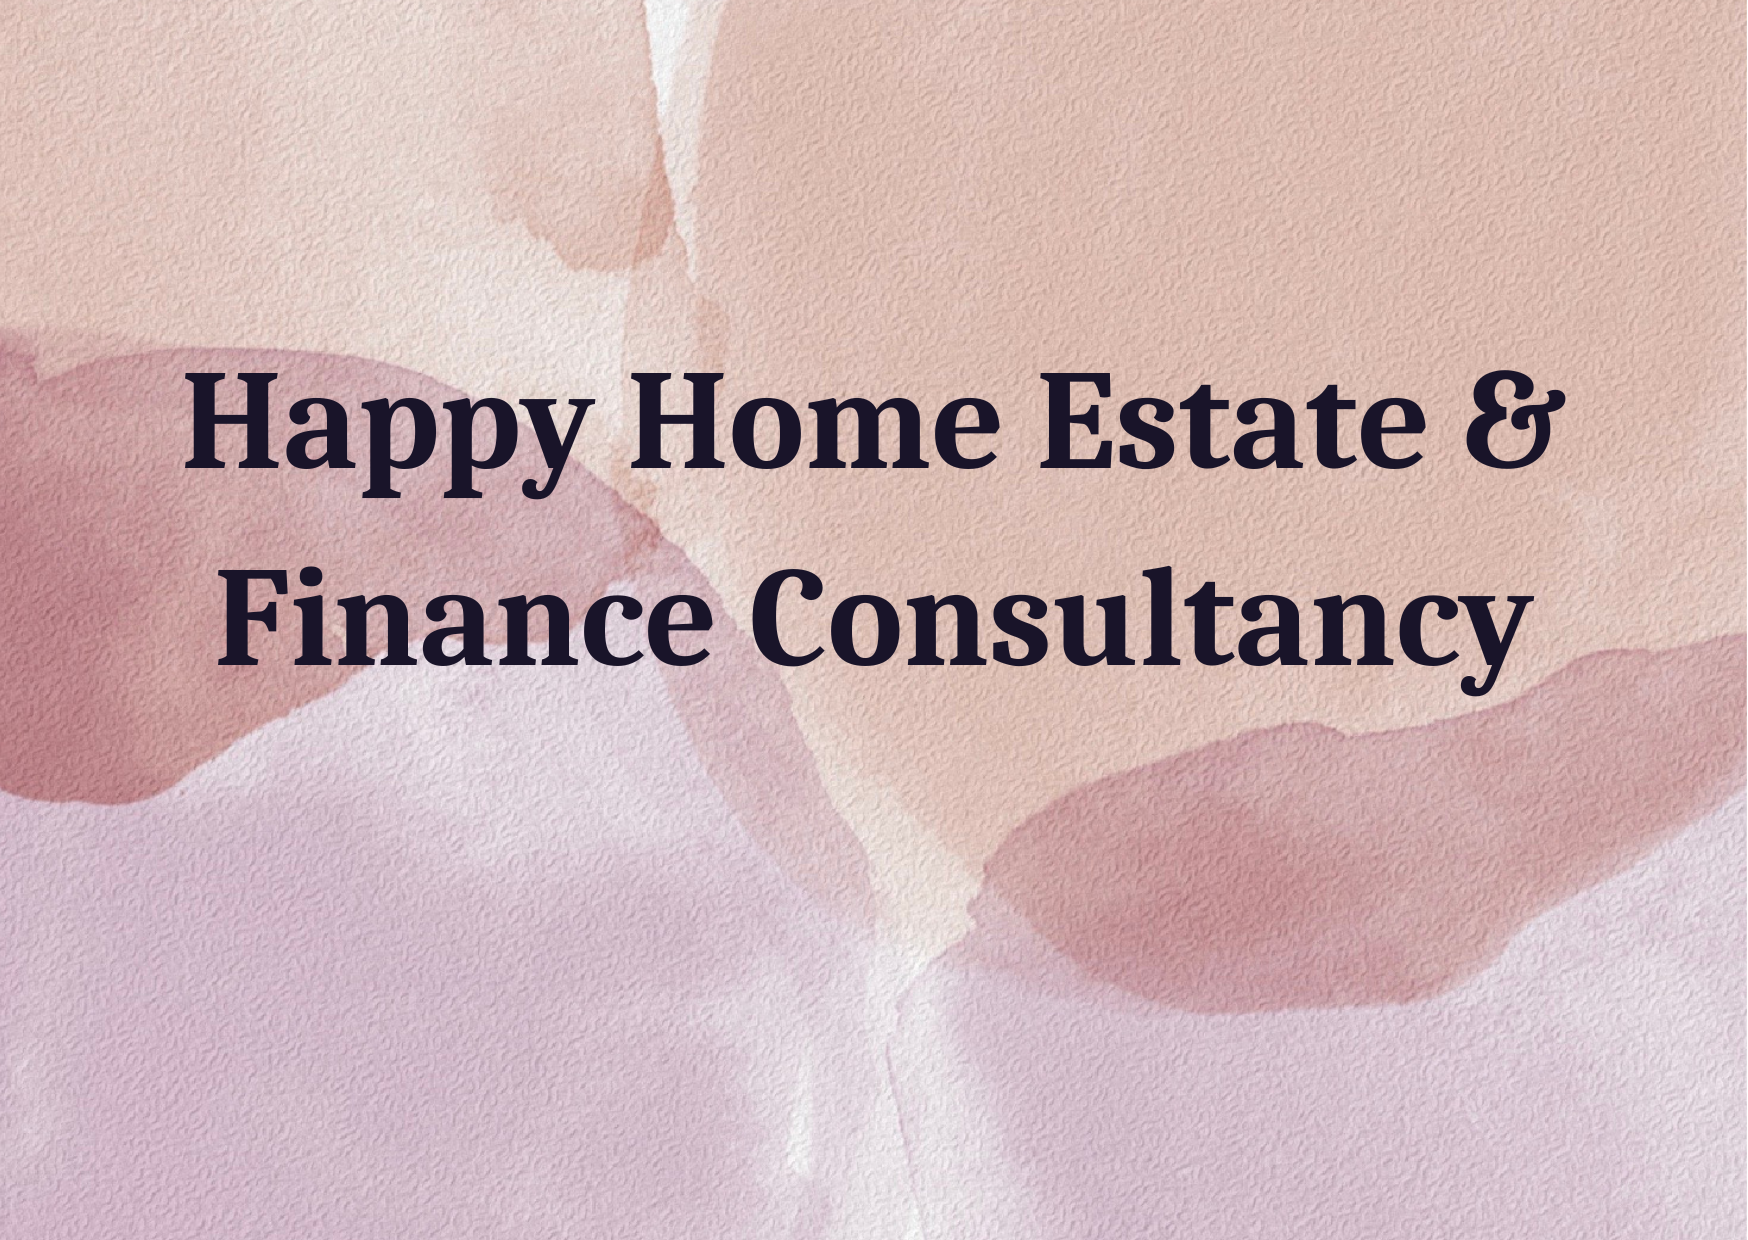 Happy Home Estate & Finance Consultancy 